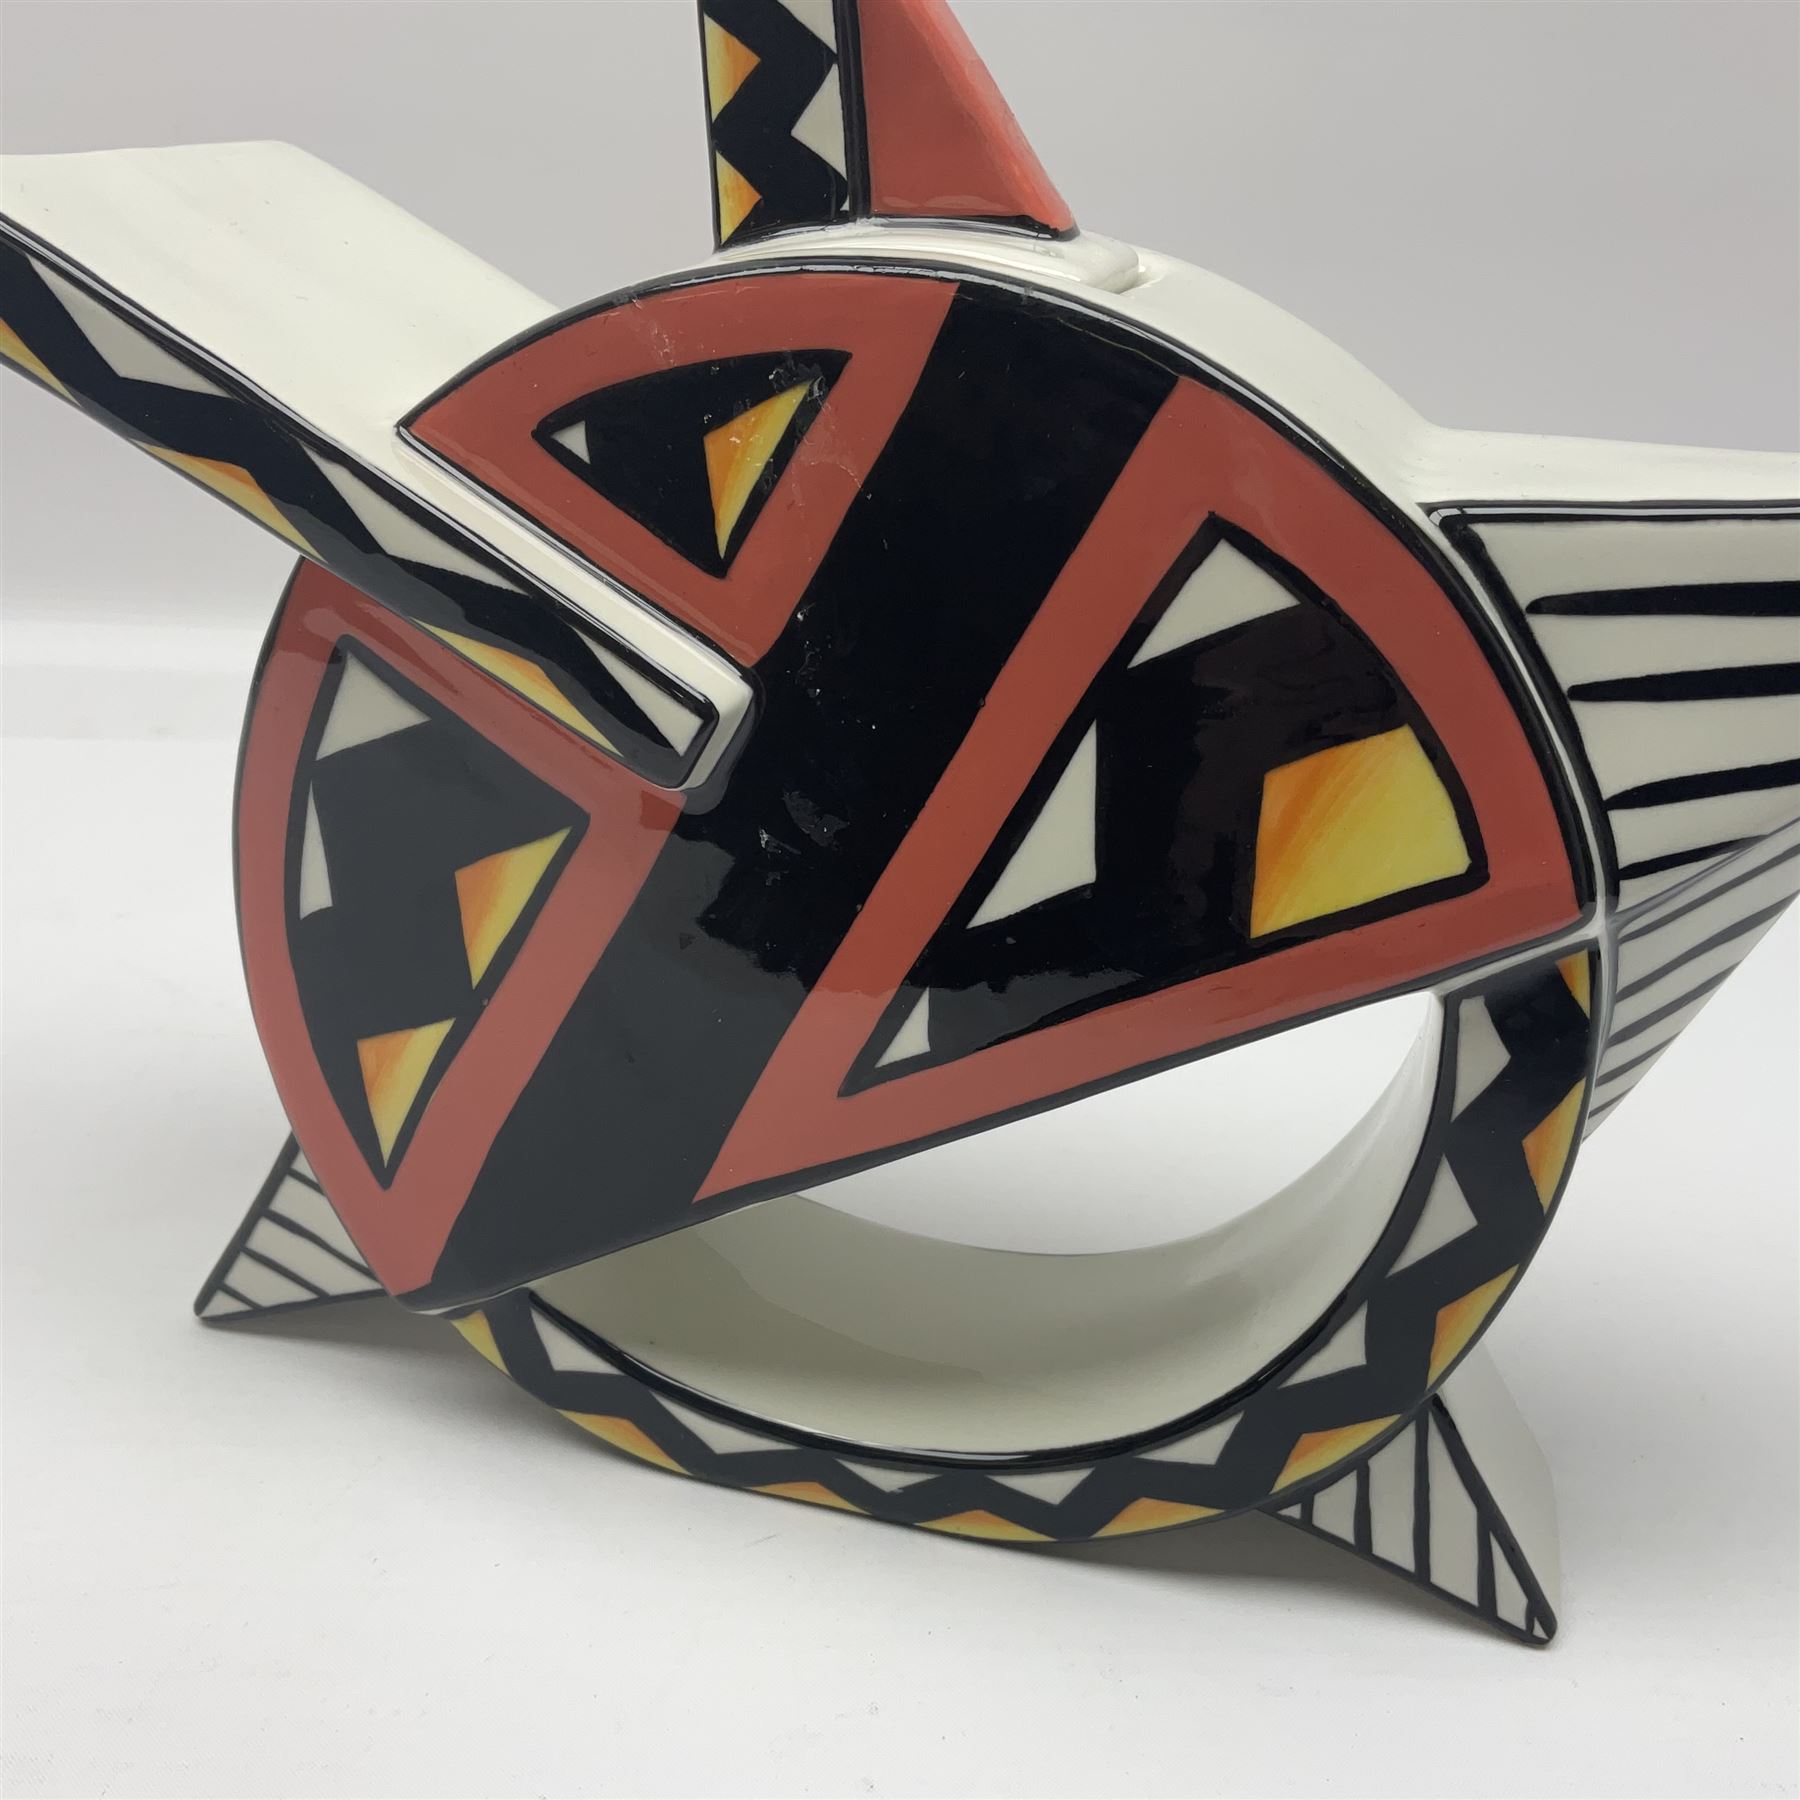 Lorna Bailey Prototype teapot - Image 8 of 11